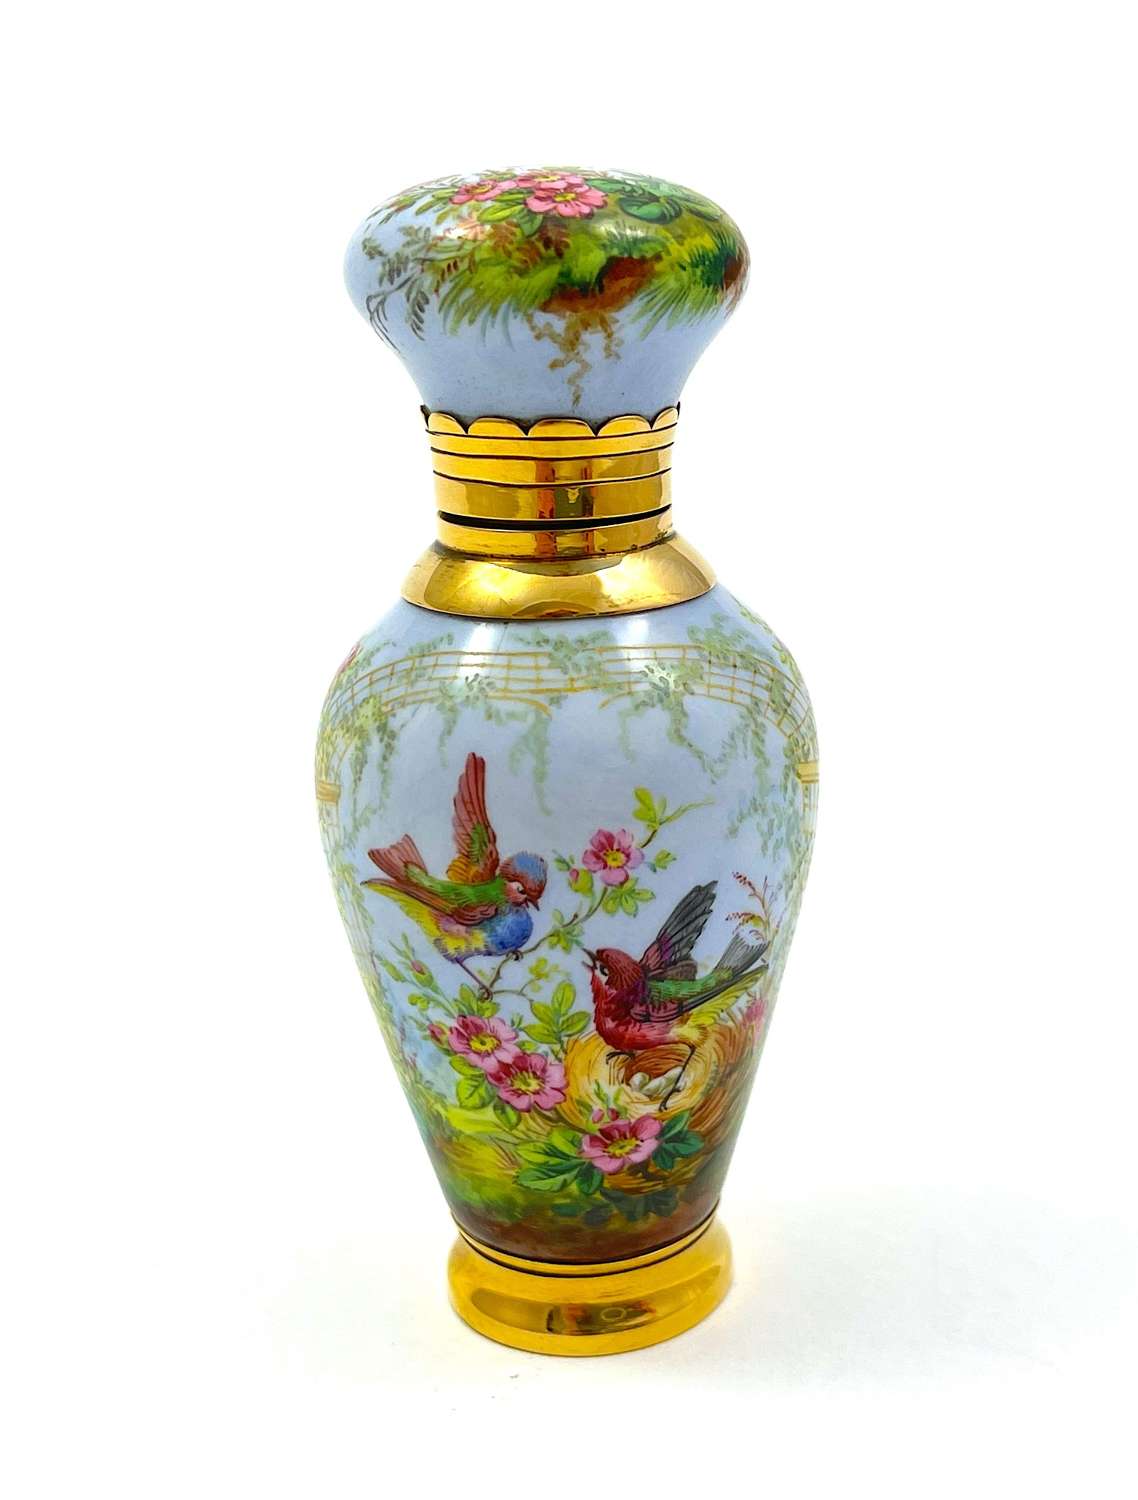 Antique French Limoges Enamelled Perfume Bottle